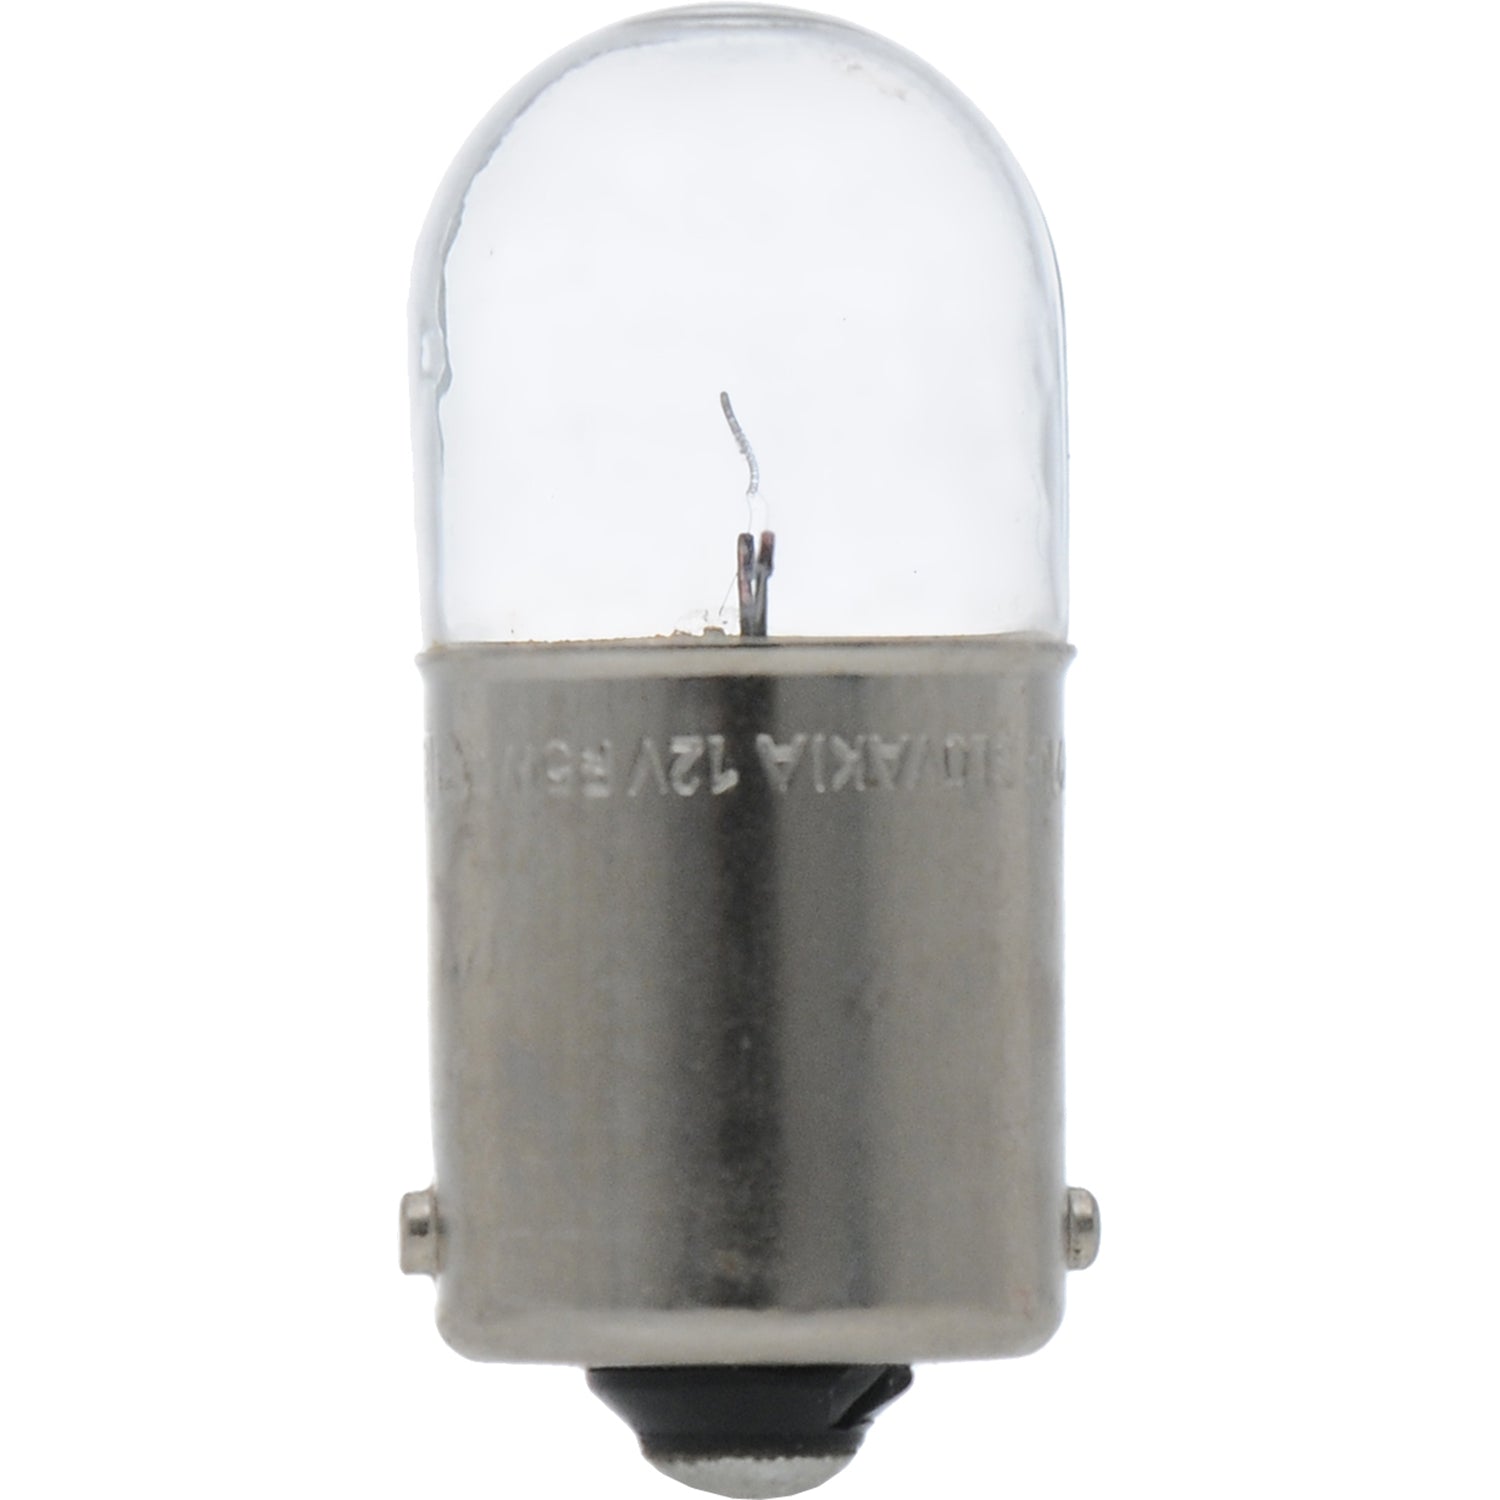 Osram Original Bulbs R5W 5007-02B 12V 5W (Pair)